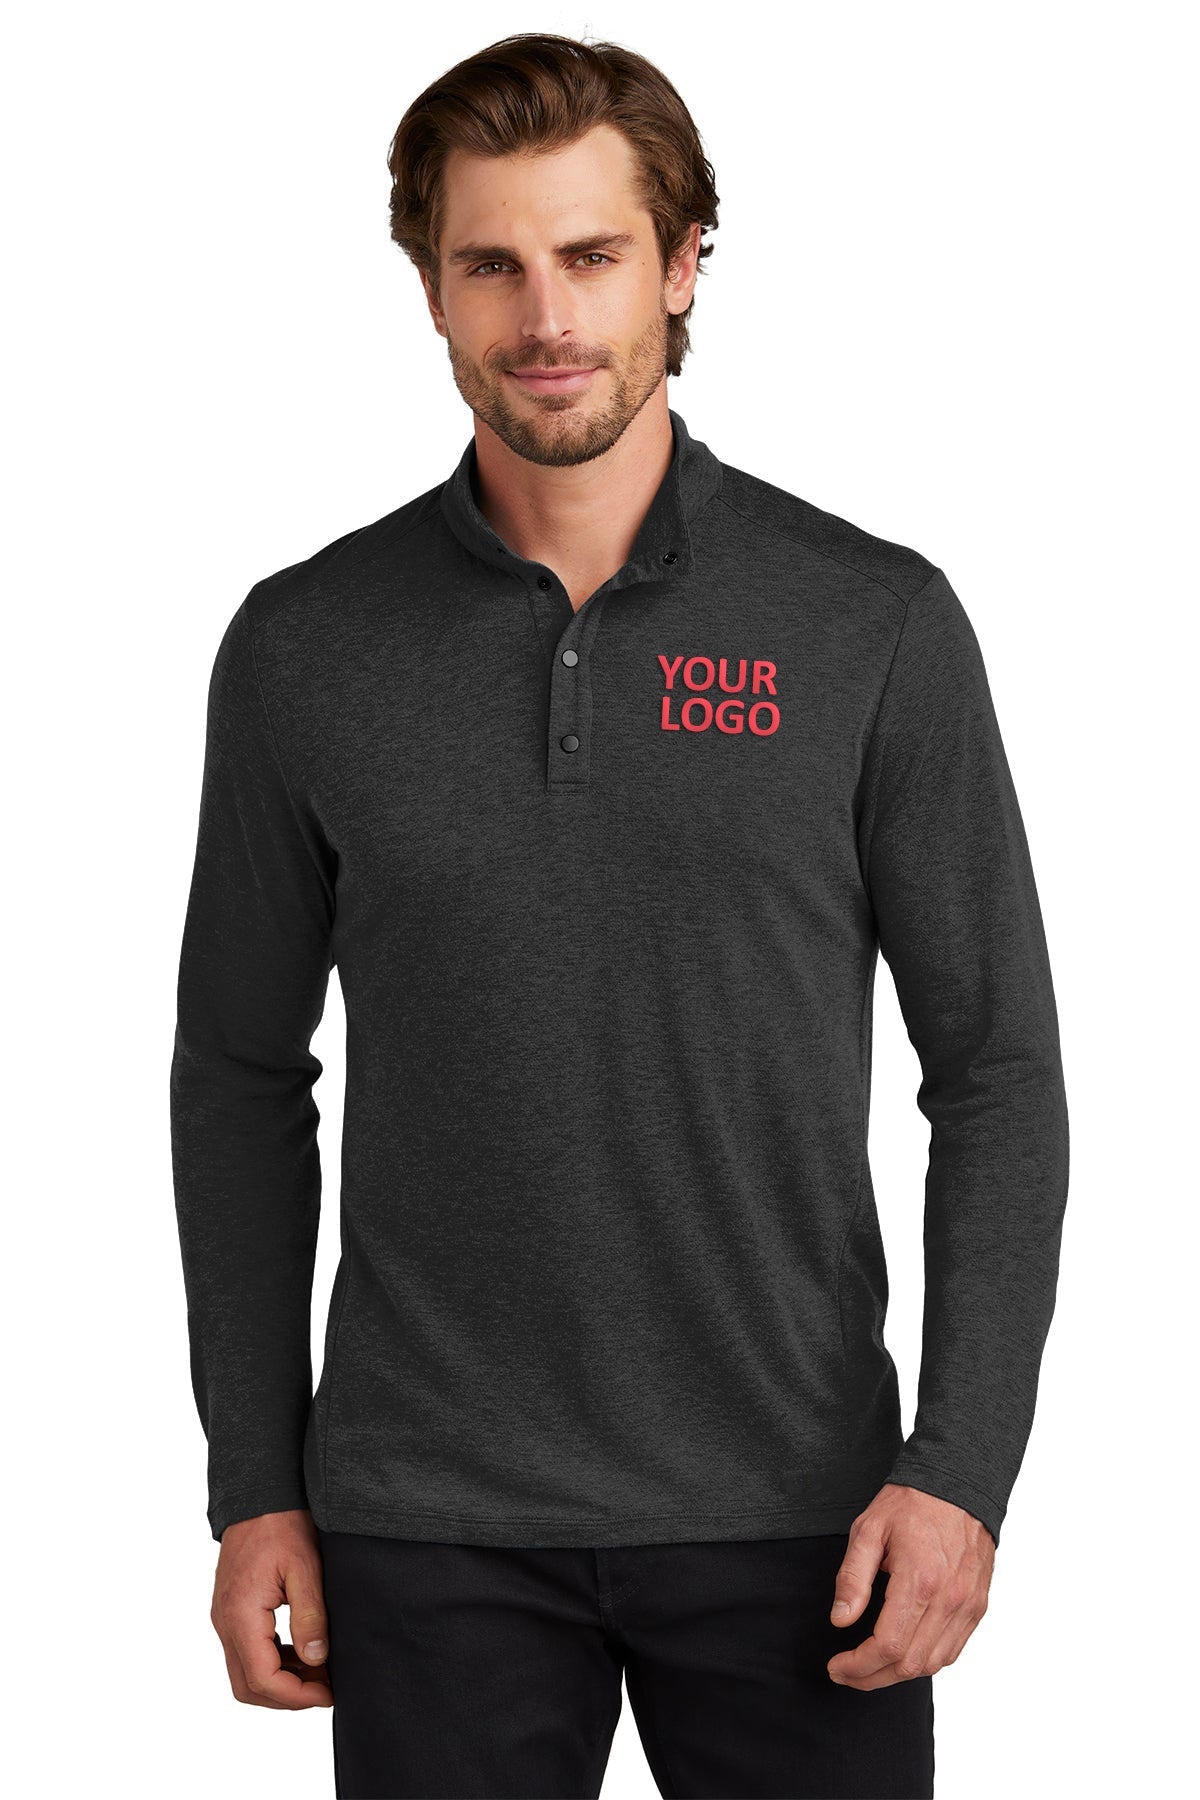 OGIO Blacktop OG151 custom embroidered sweatshirts